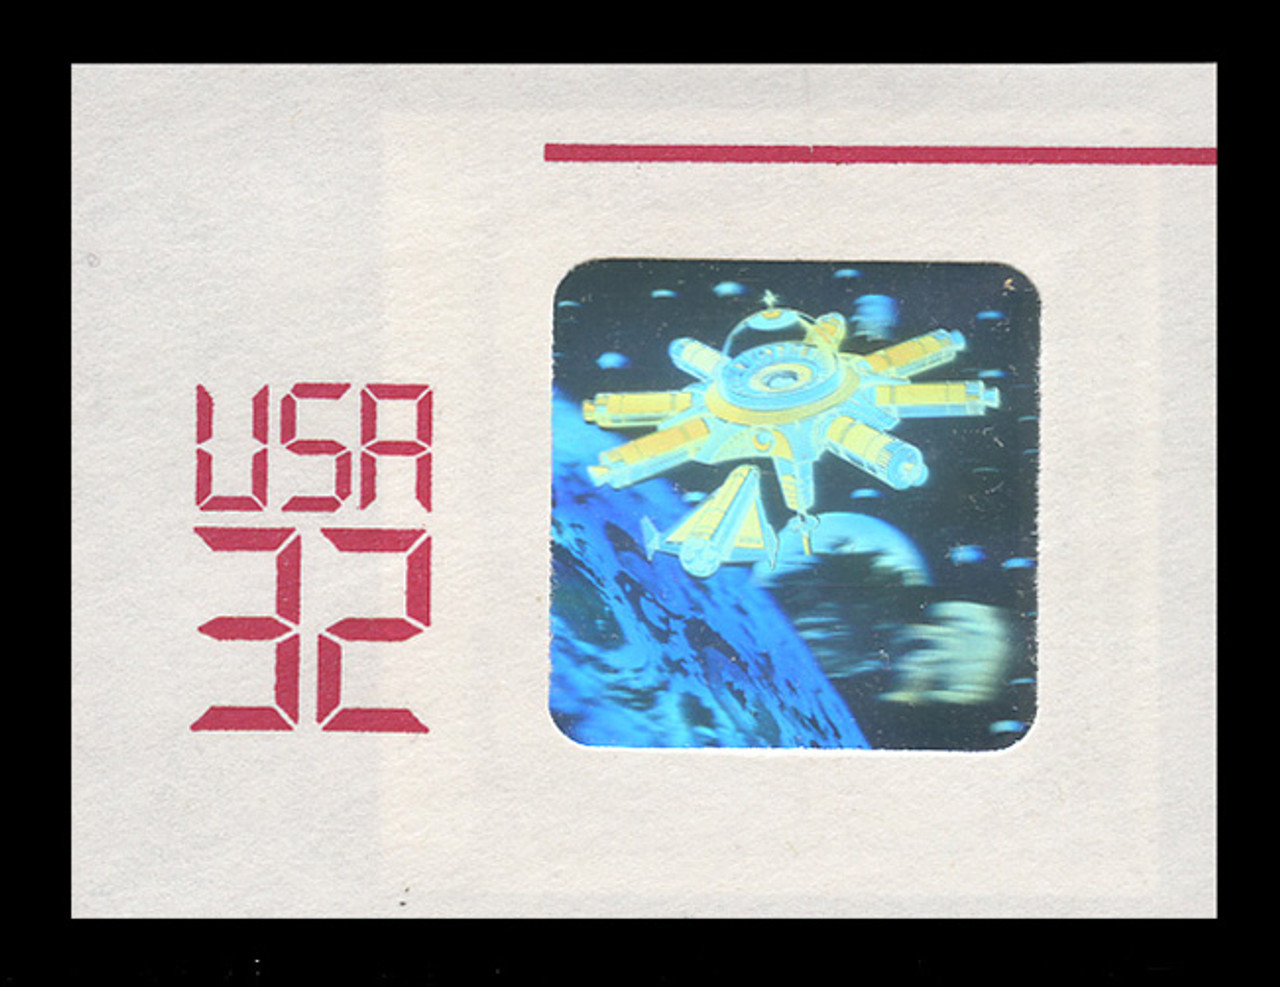 USA Scott # U 639 1995 32c Space Shuttle & Station Hologram - Mint Cut Square